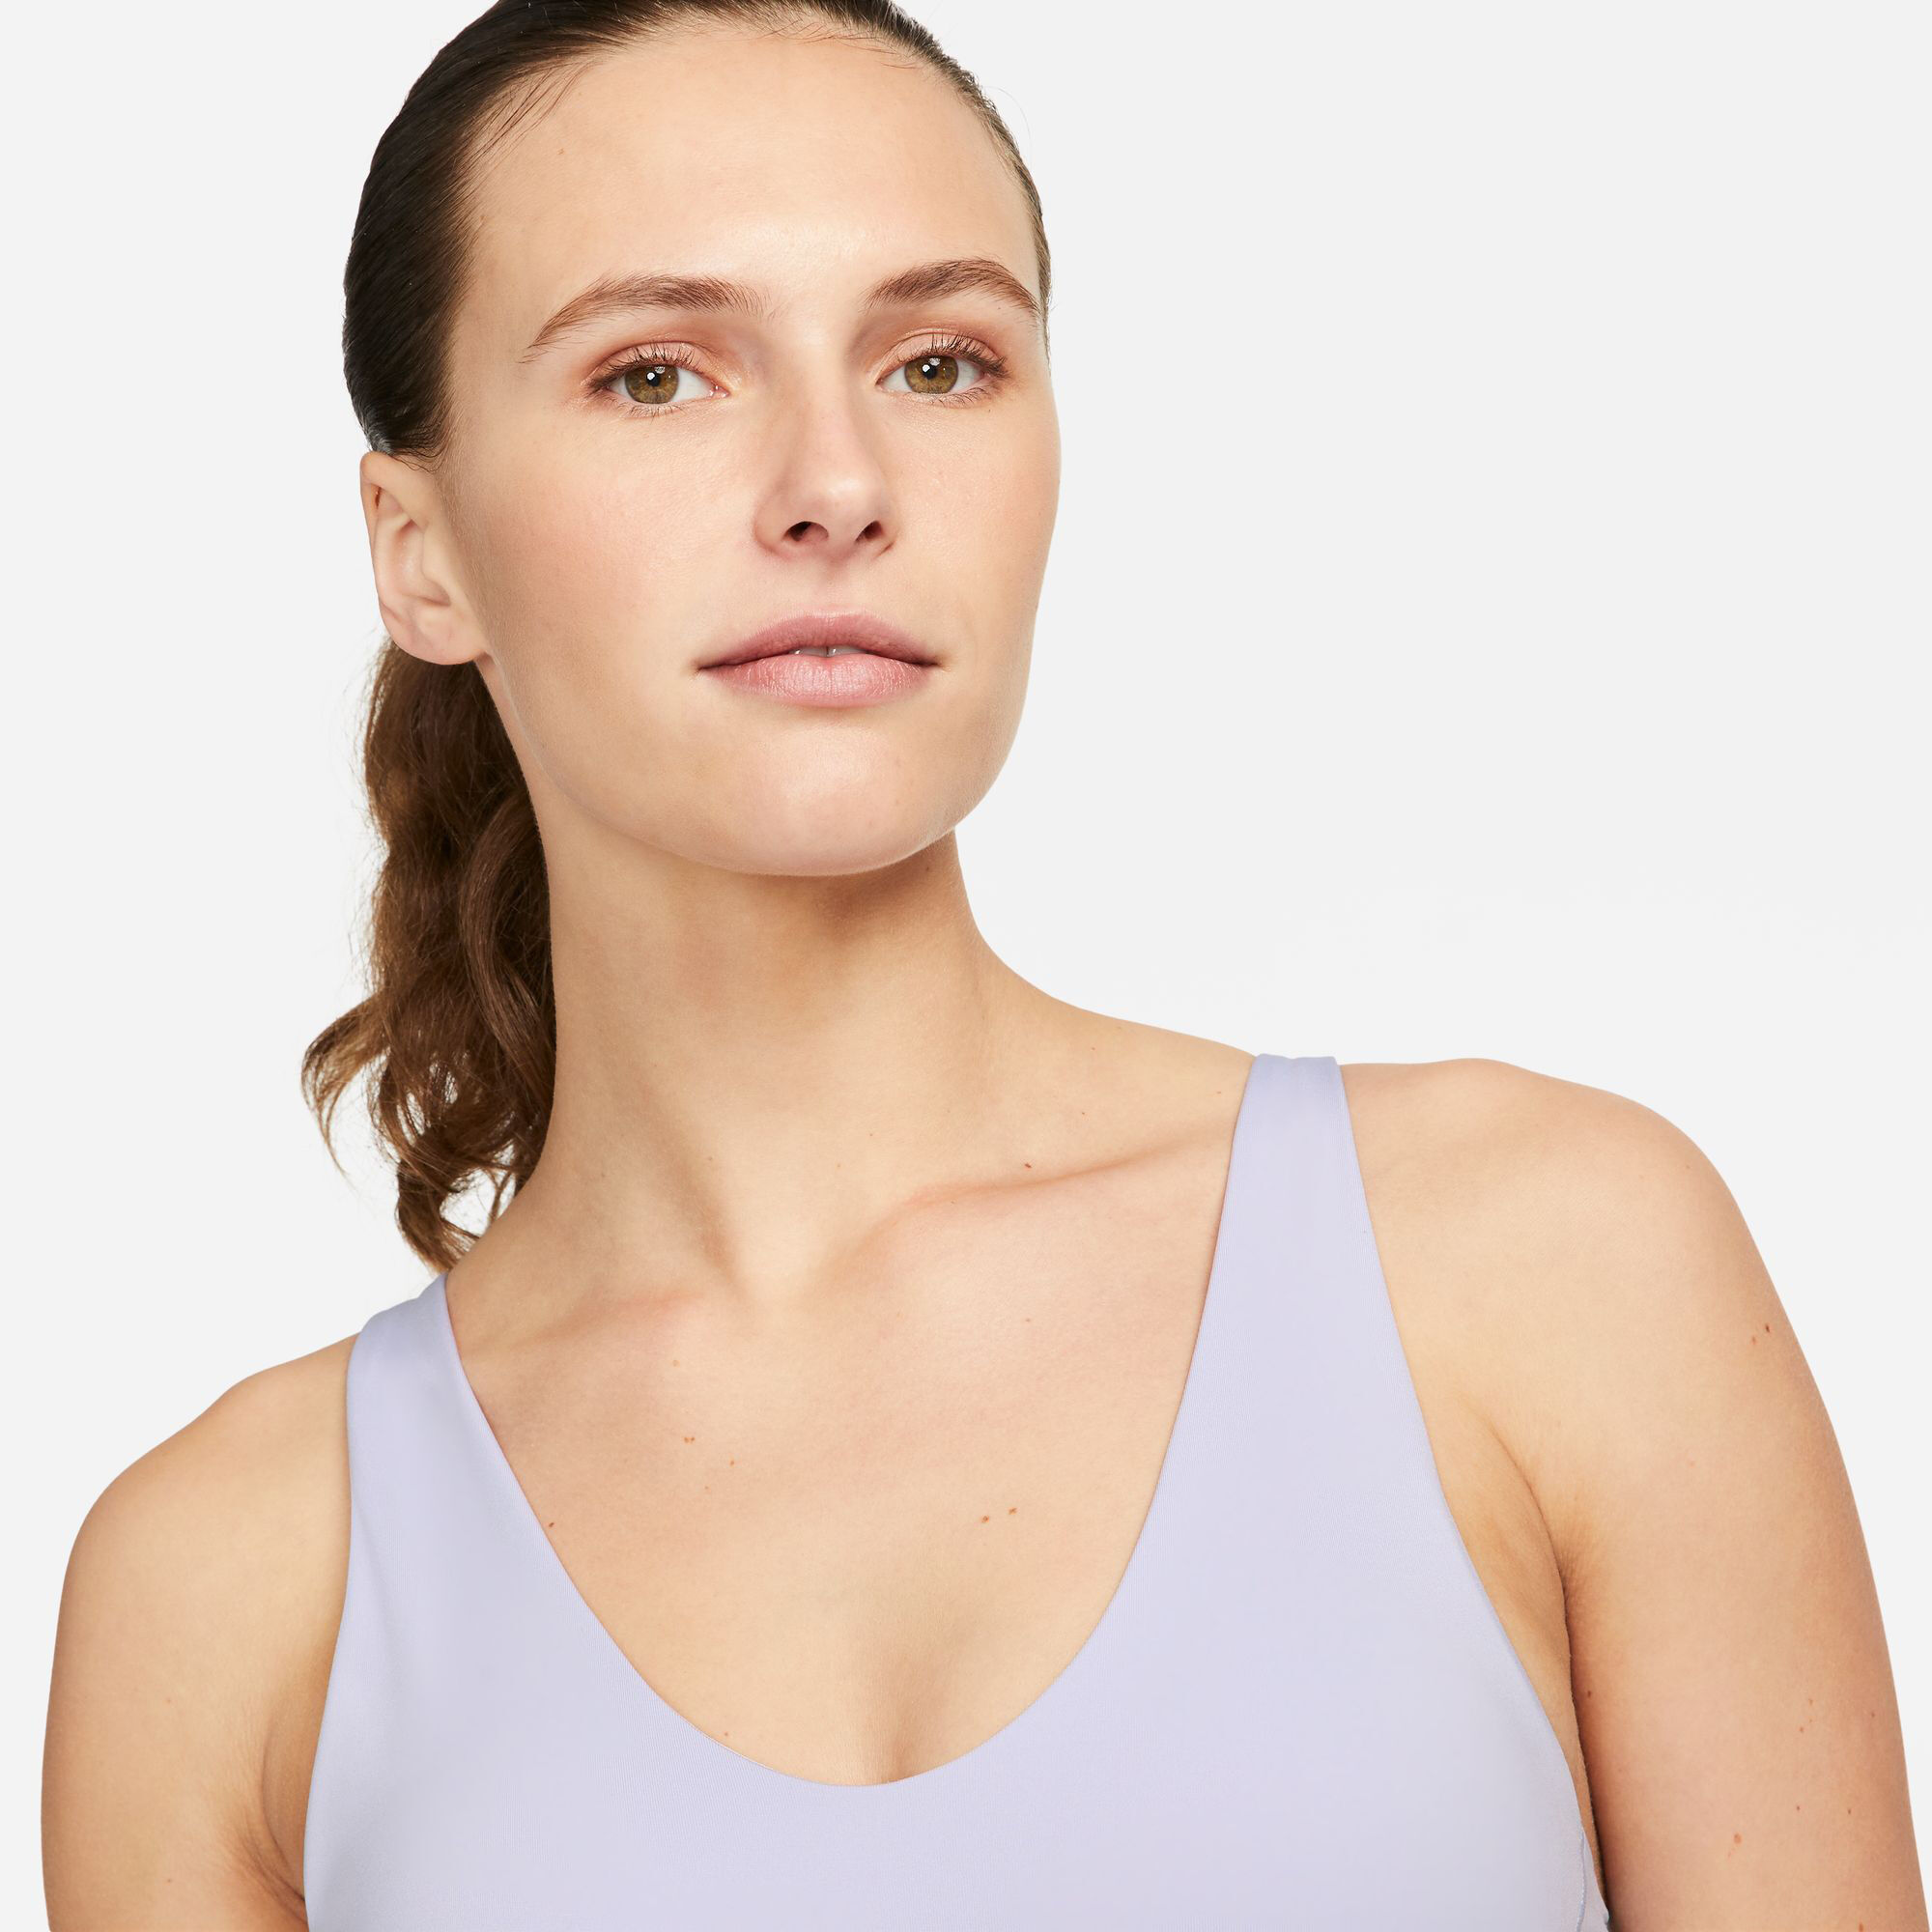 Buy Nike Dri-Fit Indy Plunge Cutout Sports Bras Women Lilac online